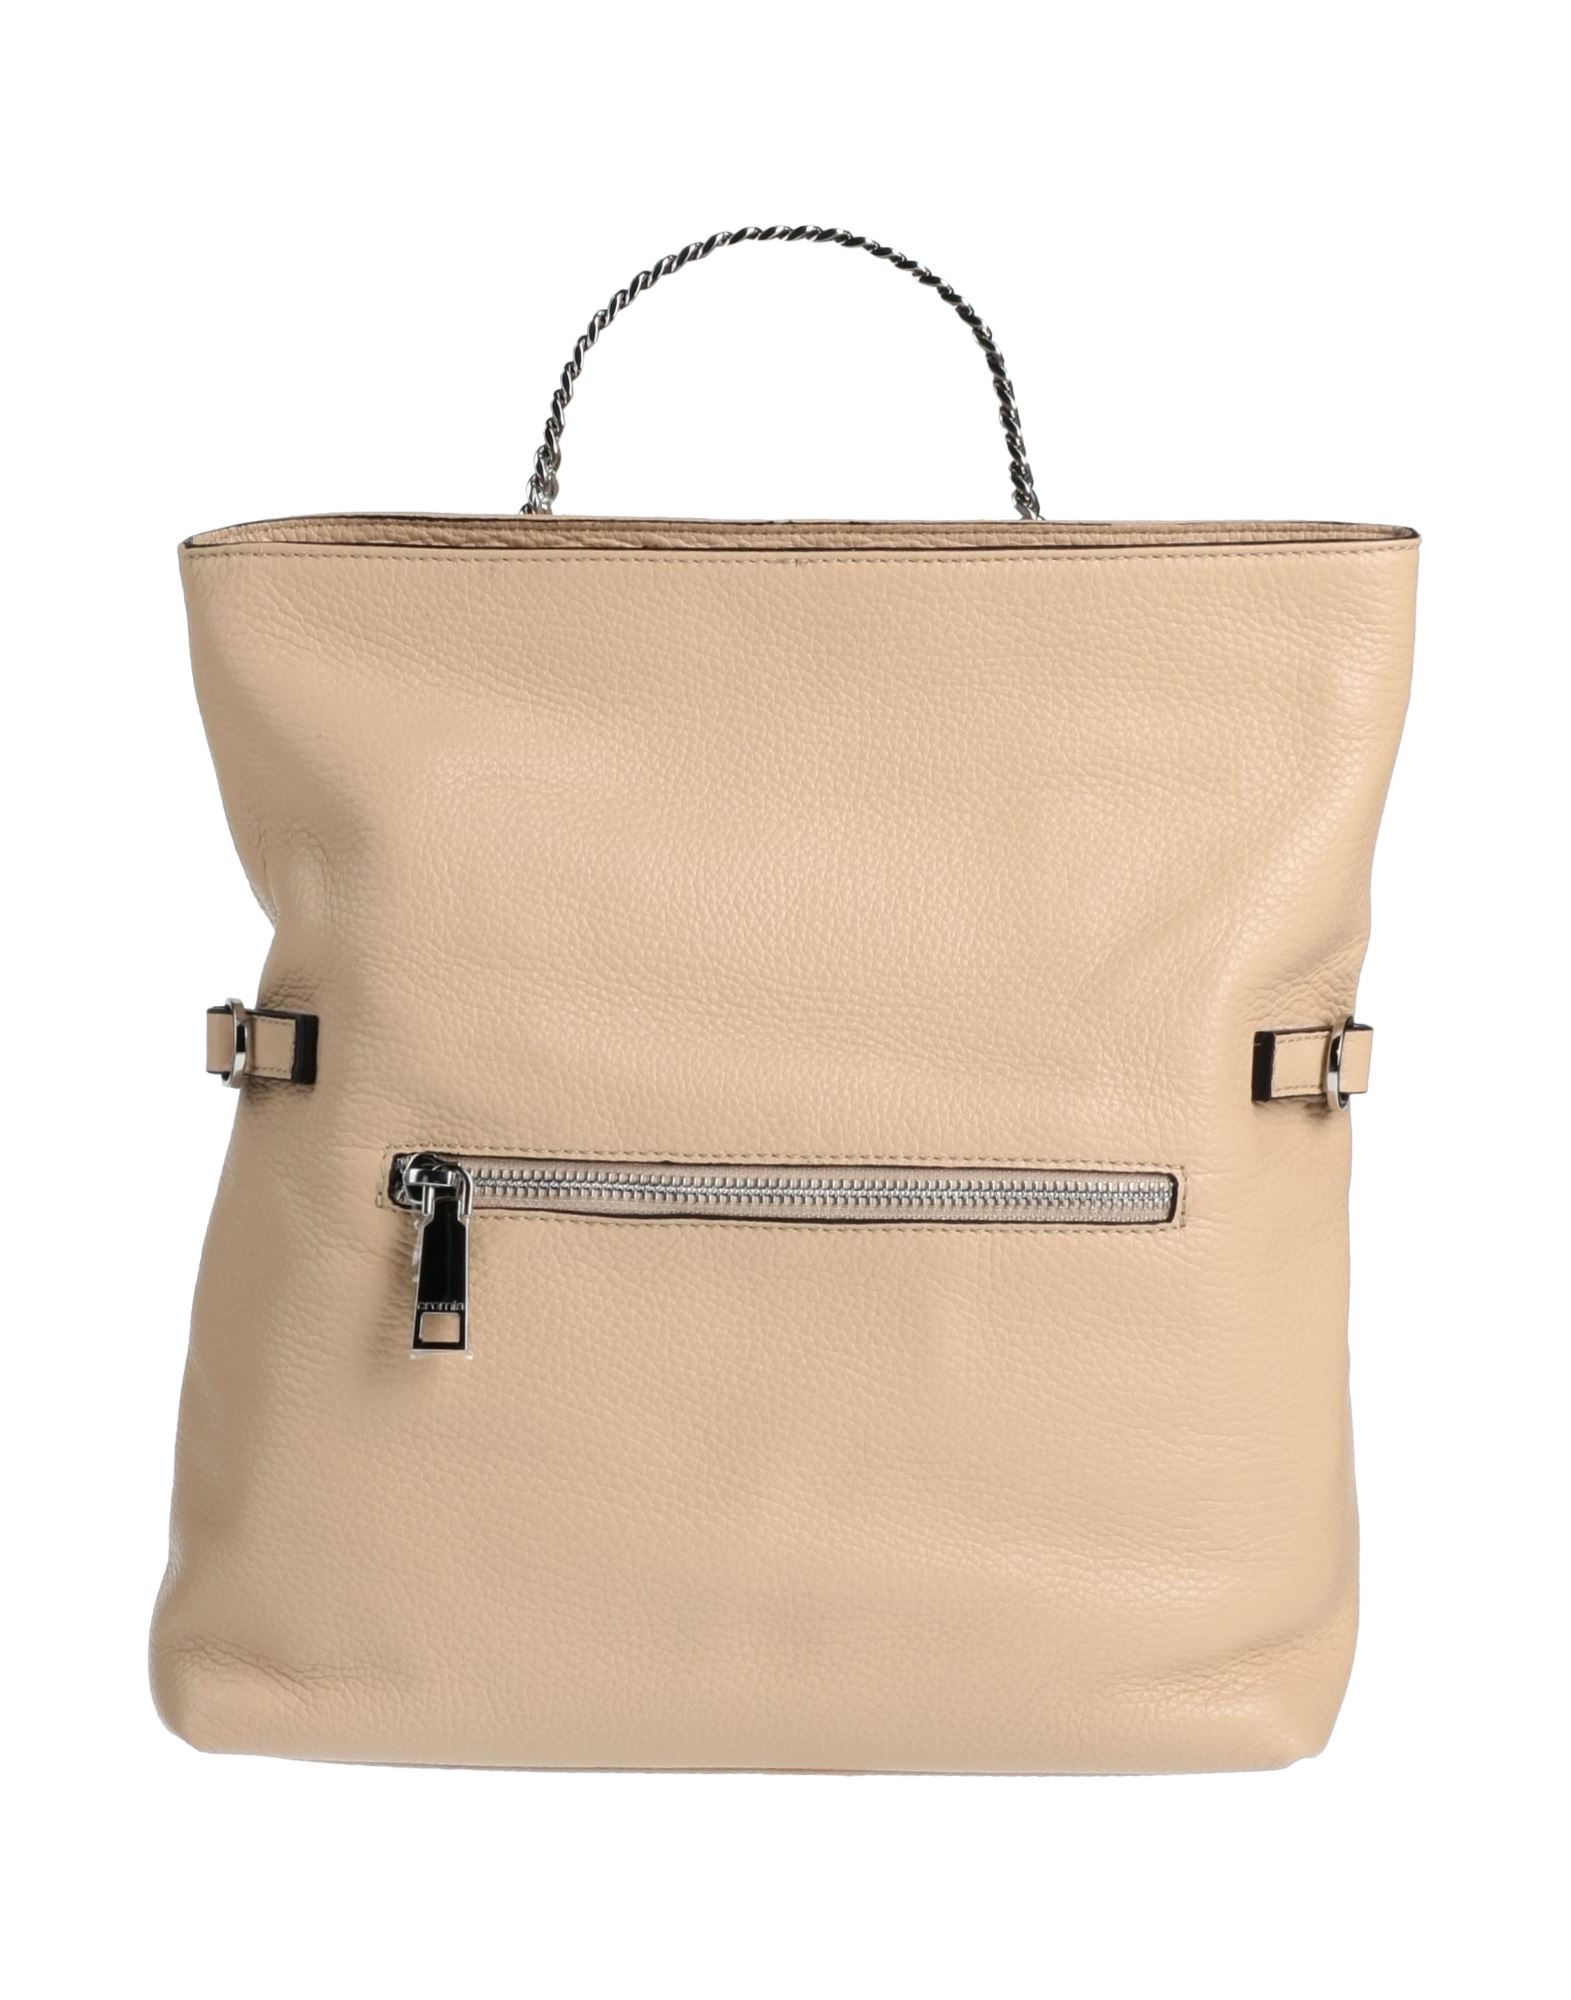 Cromia women's designer smooth leather trapezoidal Tote bag beige & tan